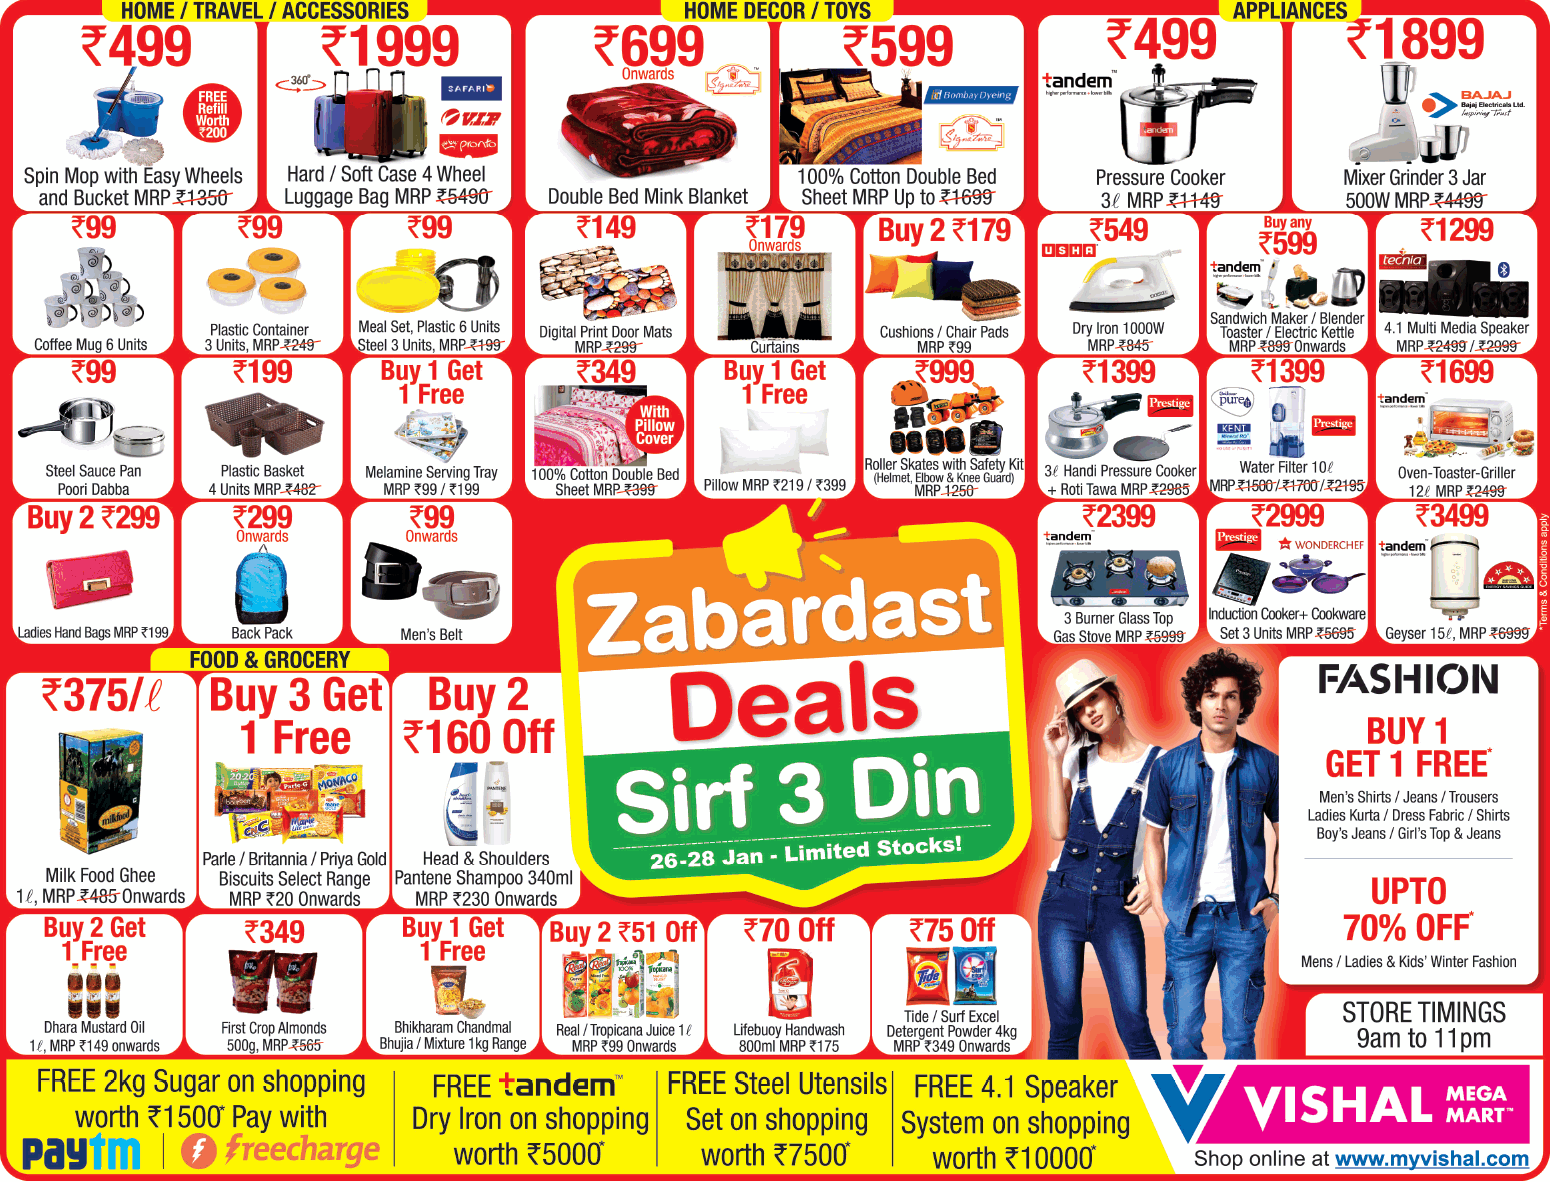 Vishal Mega Mart Zabardast Deals Sirf 3 Din Fashion Buy 1 Get 1 Free Ad Advert Gallery